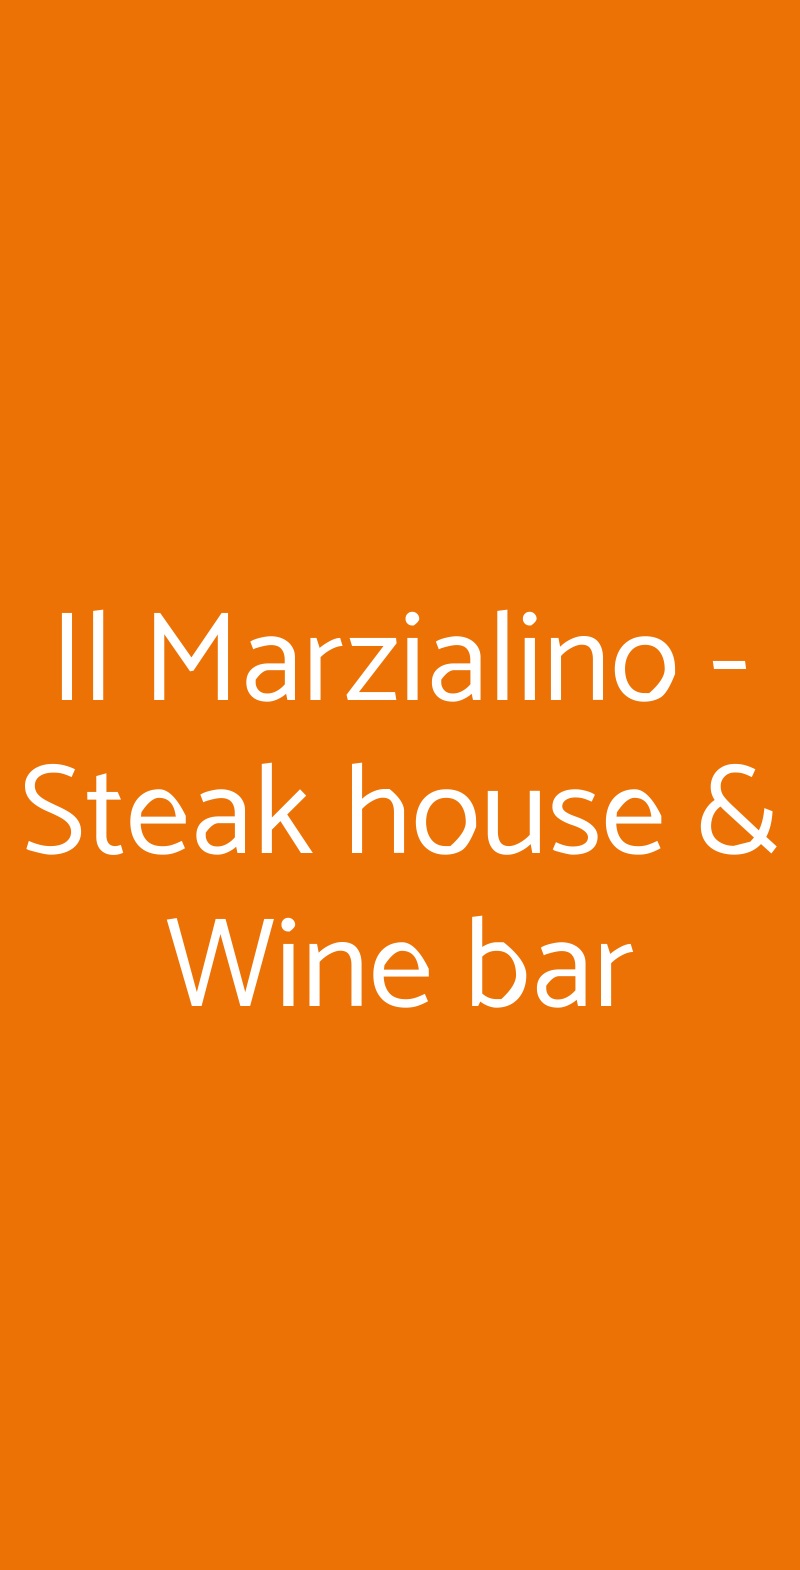 Il Marzialino - Steak house & Wine bar Sorrento menù 1 pagina